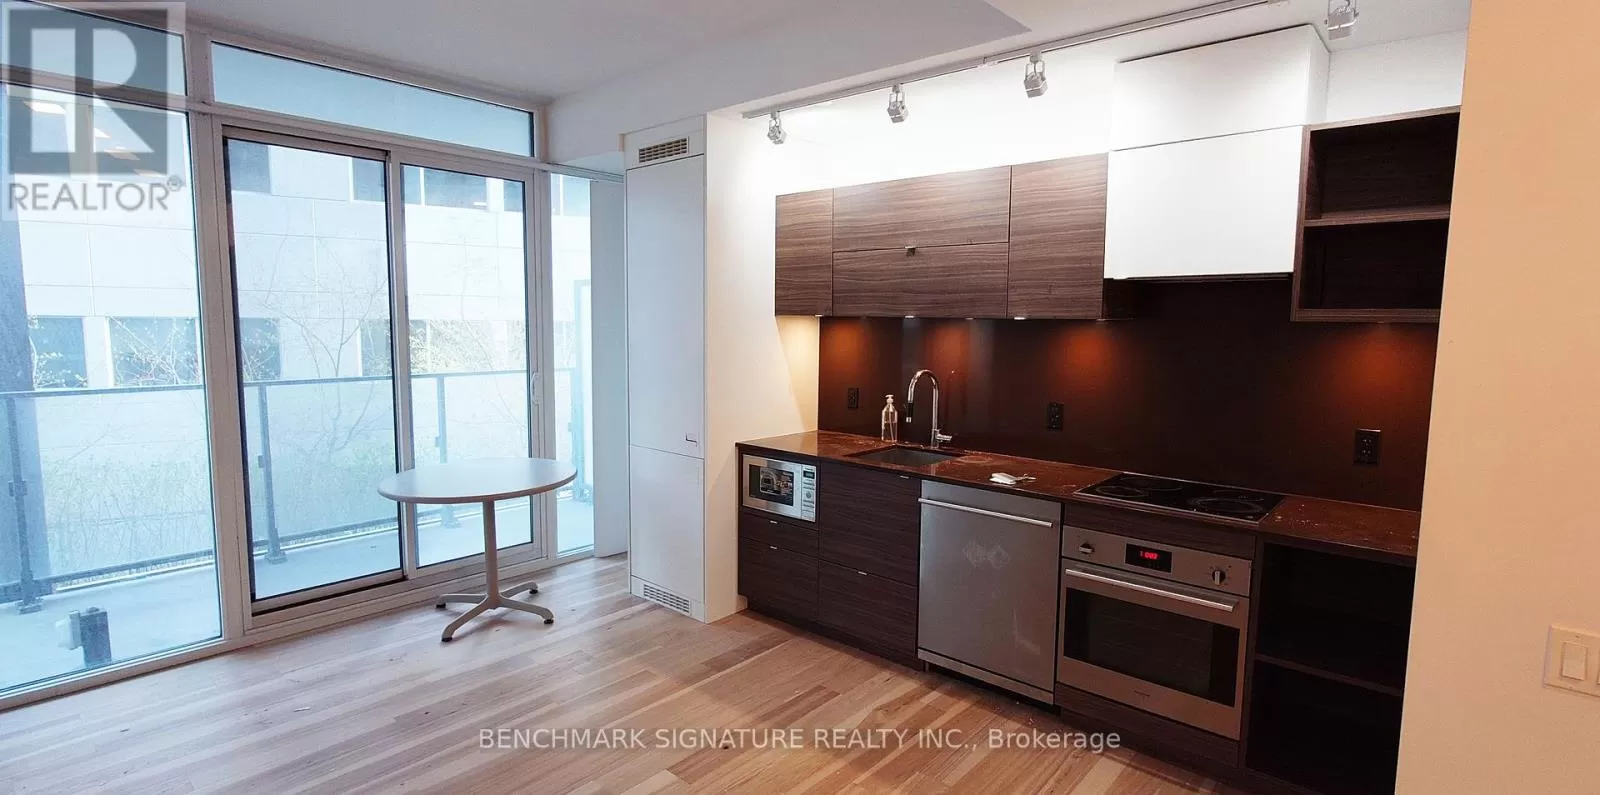 Apartment for rent: 612 - 125 Peter Street, Toronto, Ontario M5V 0M2